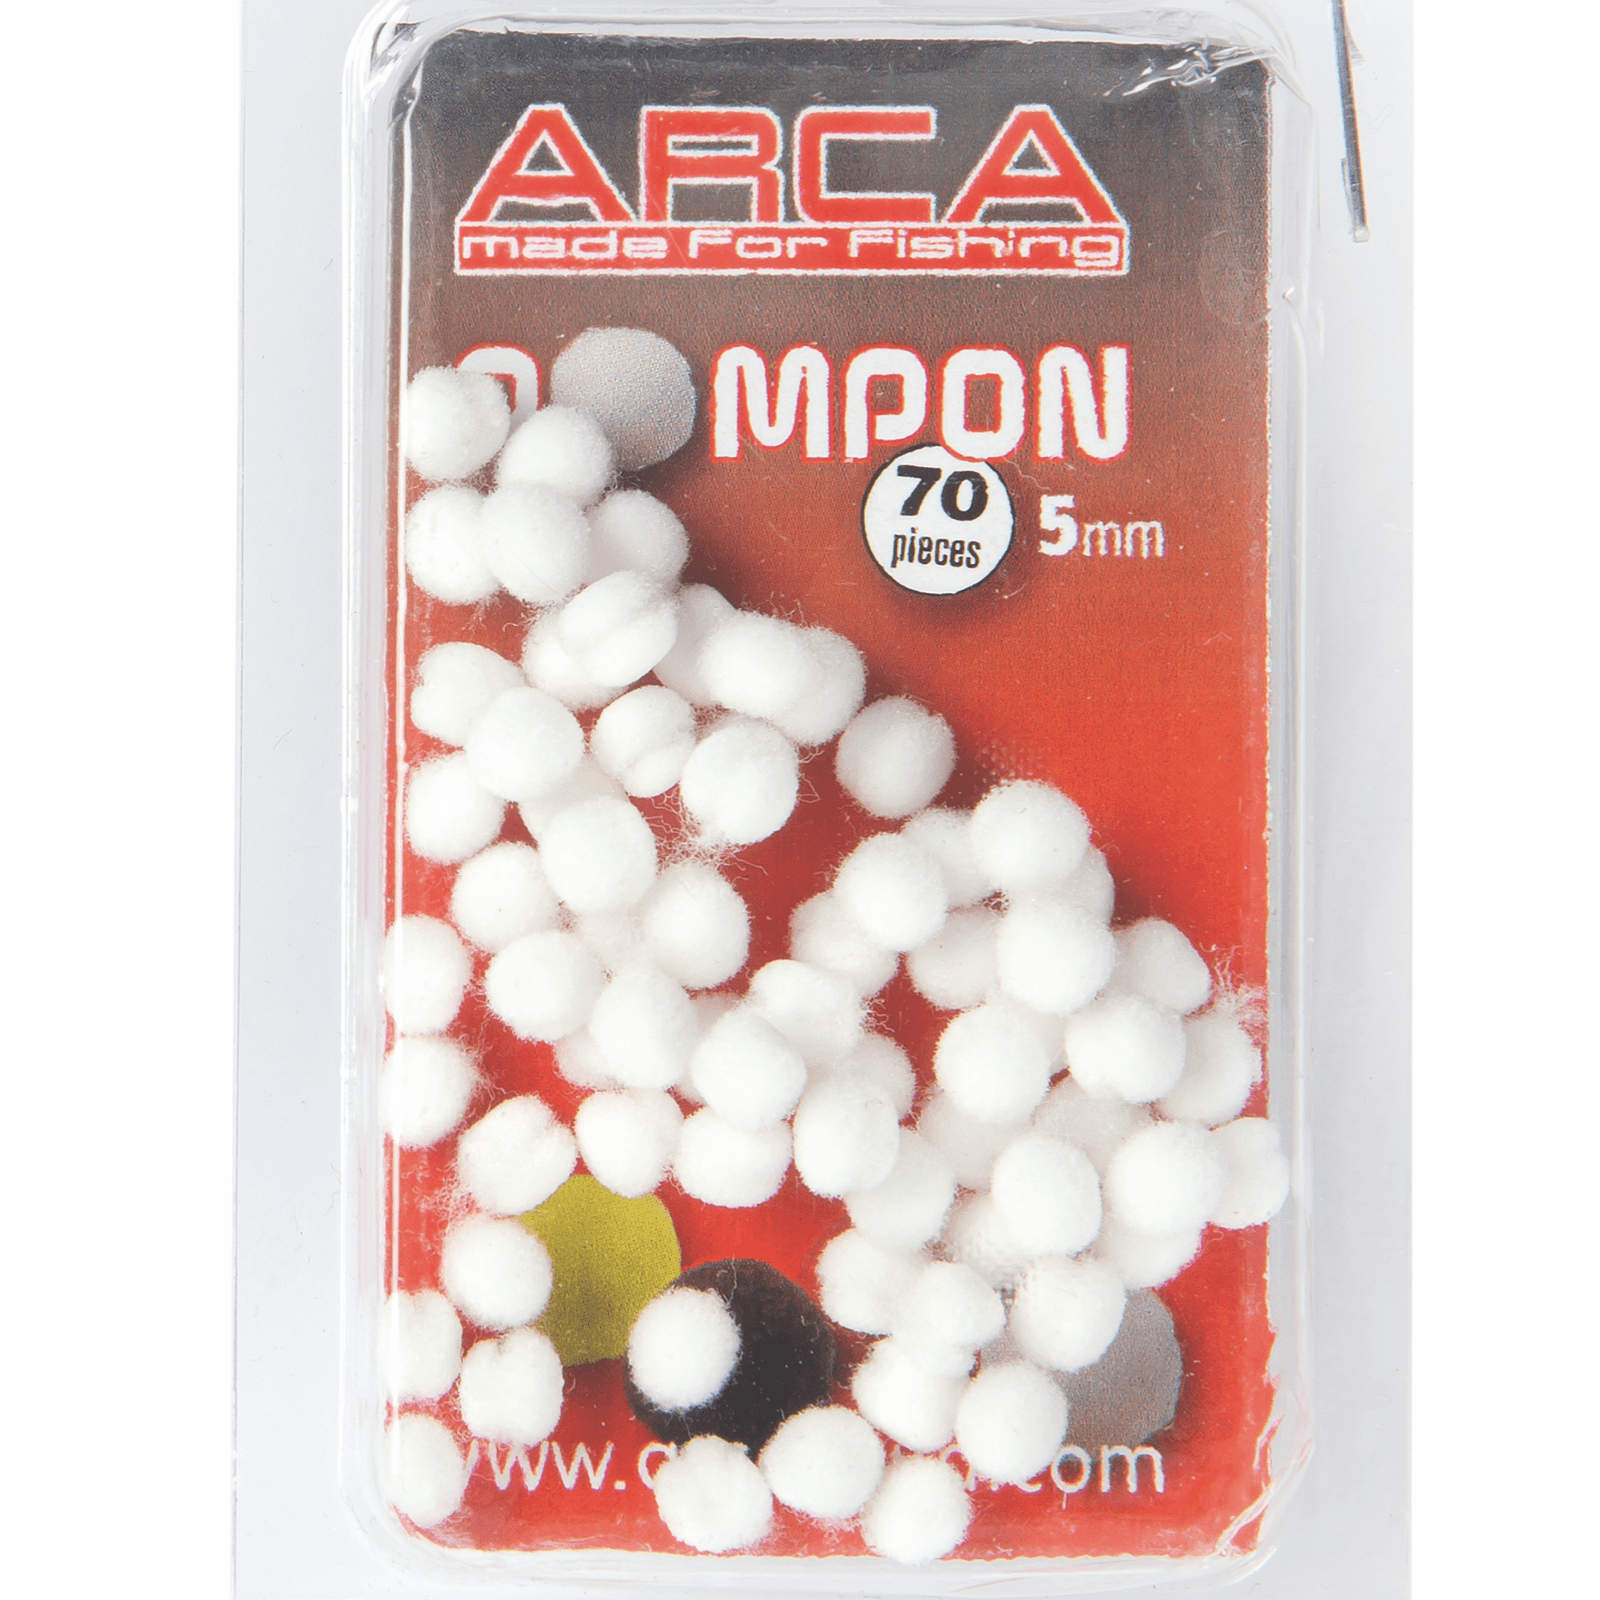 Arca pompon 5mm white